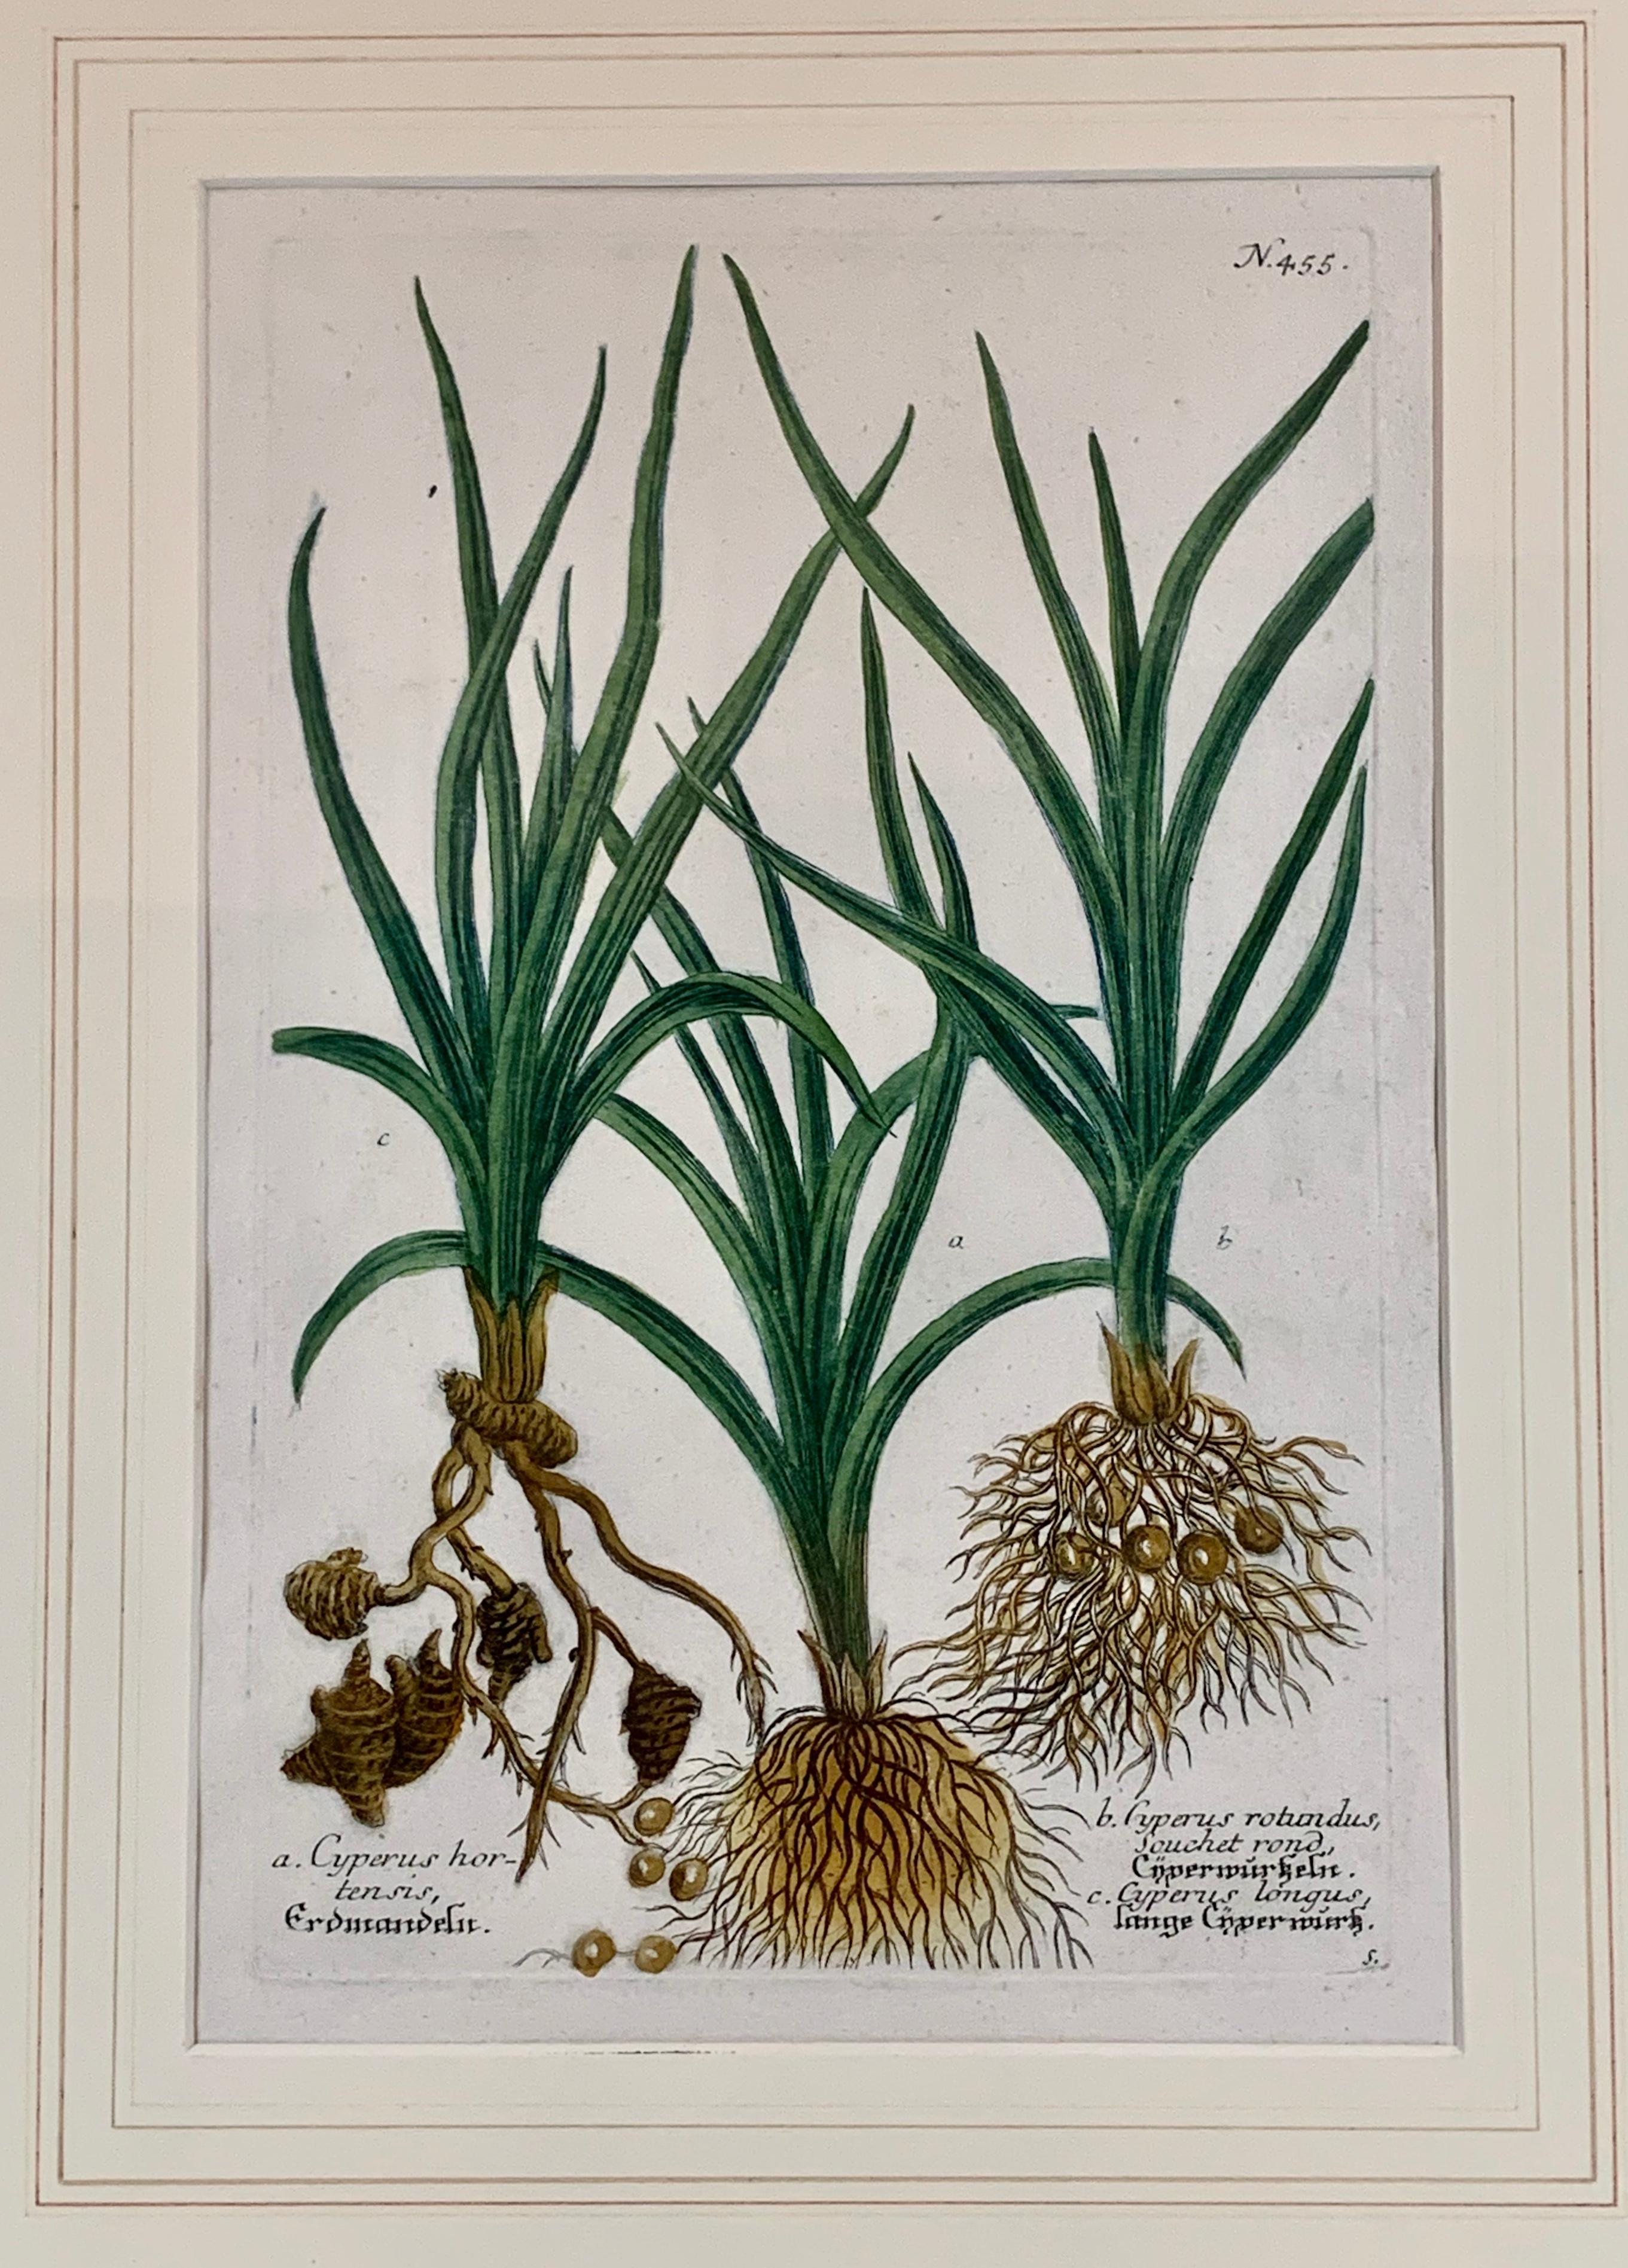 Botanical by Johann Wilhelm Weimann (1683-1741) published this print 